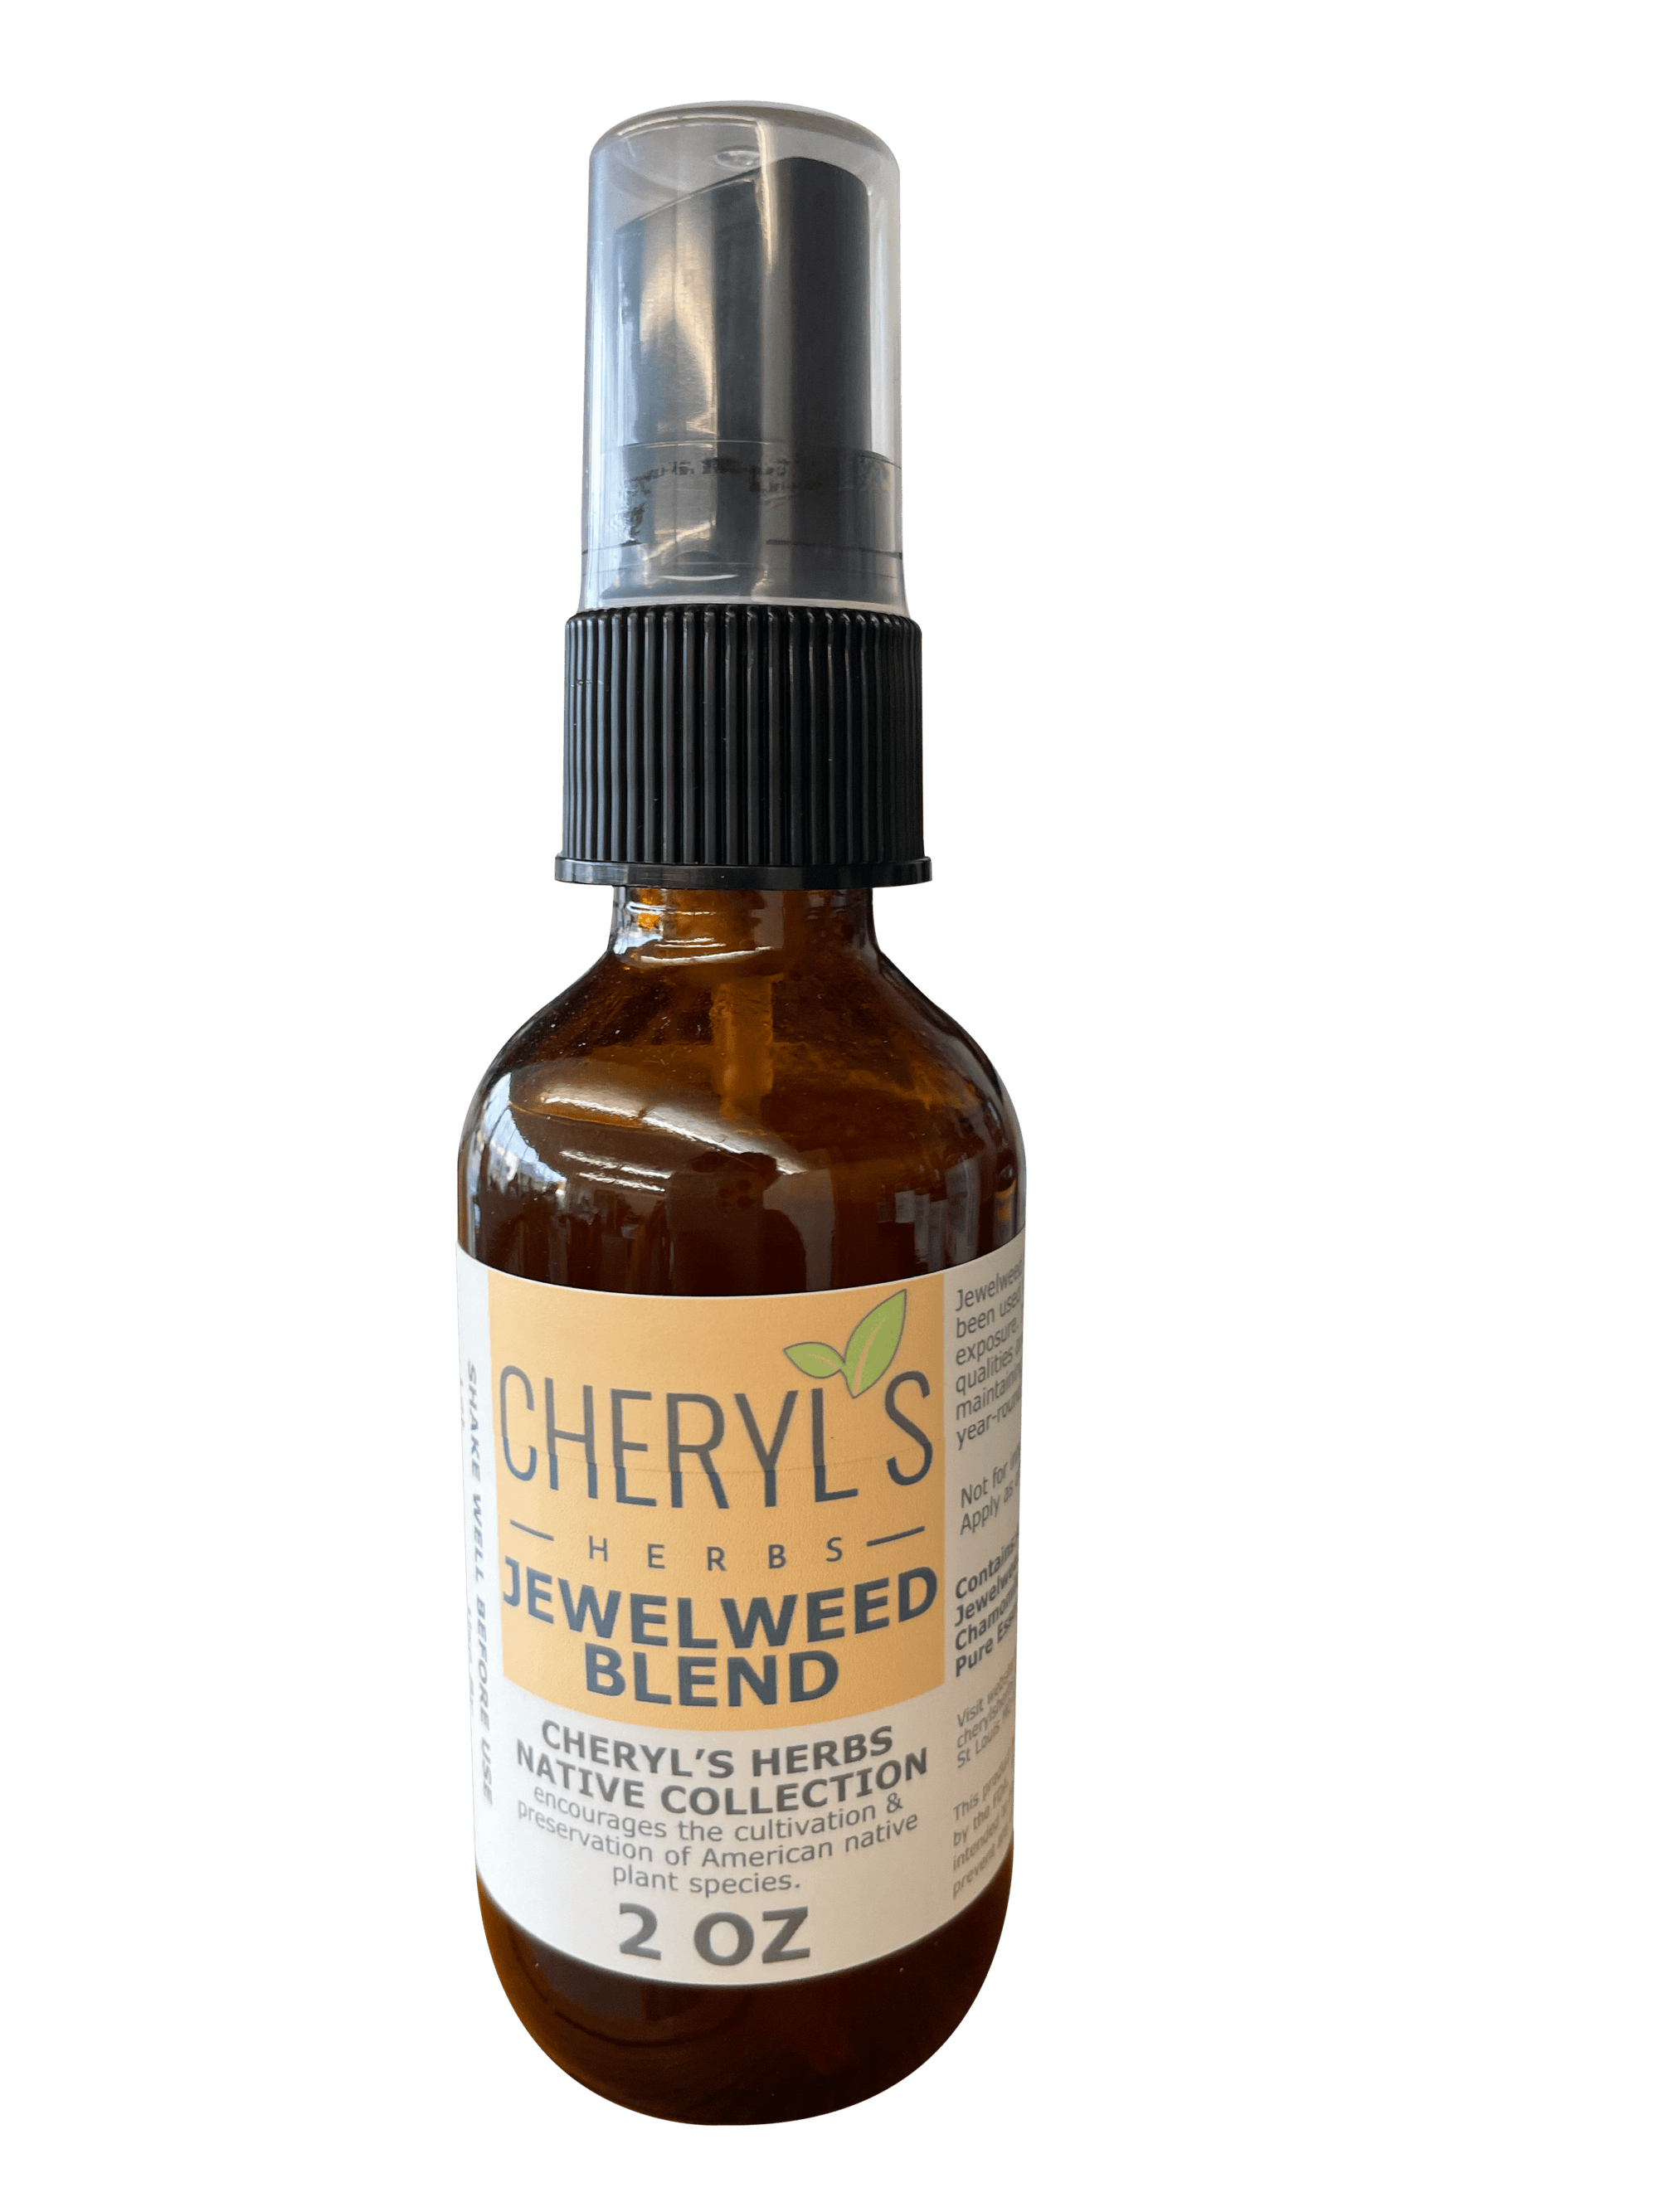 JEWELWEED BLEND - Cheryls Herbs